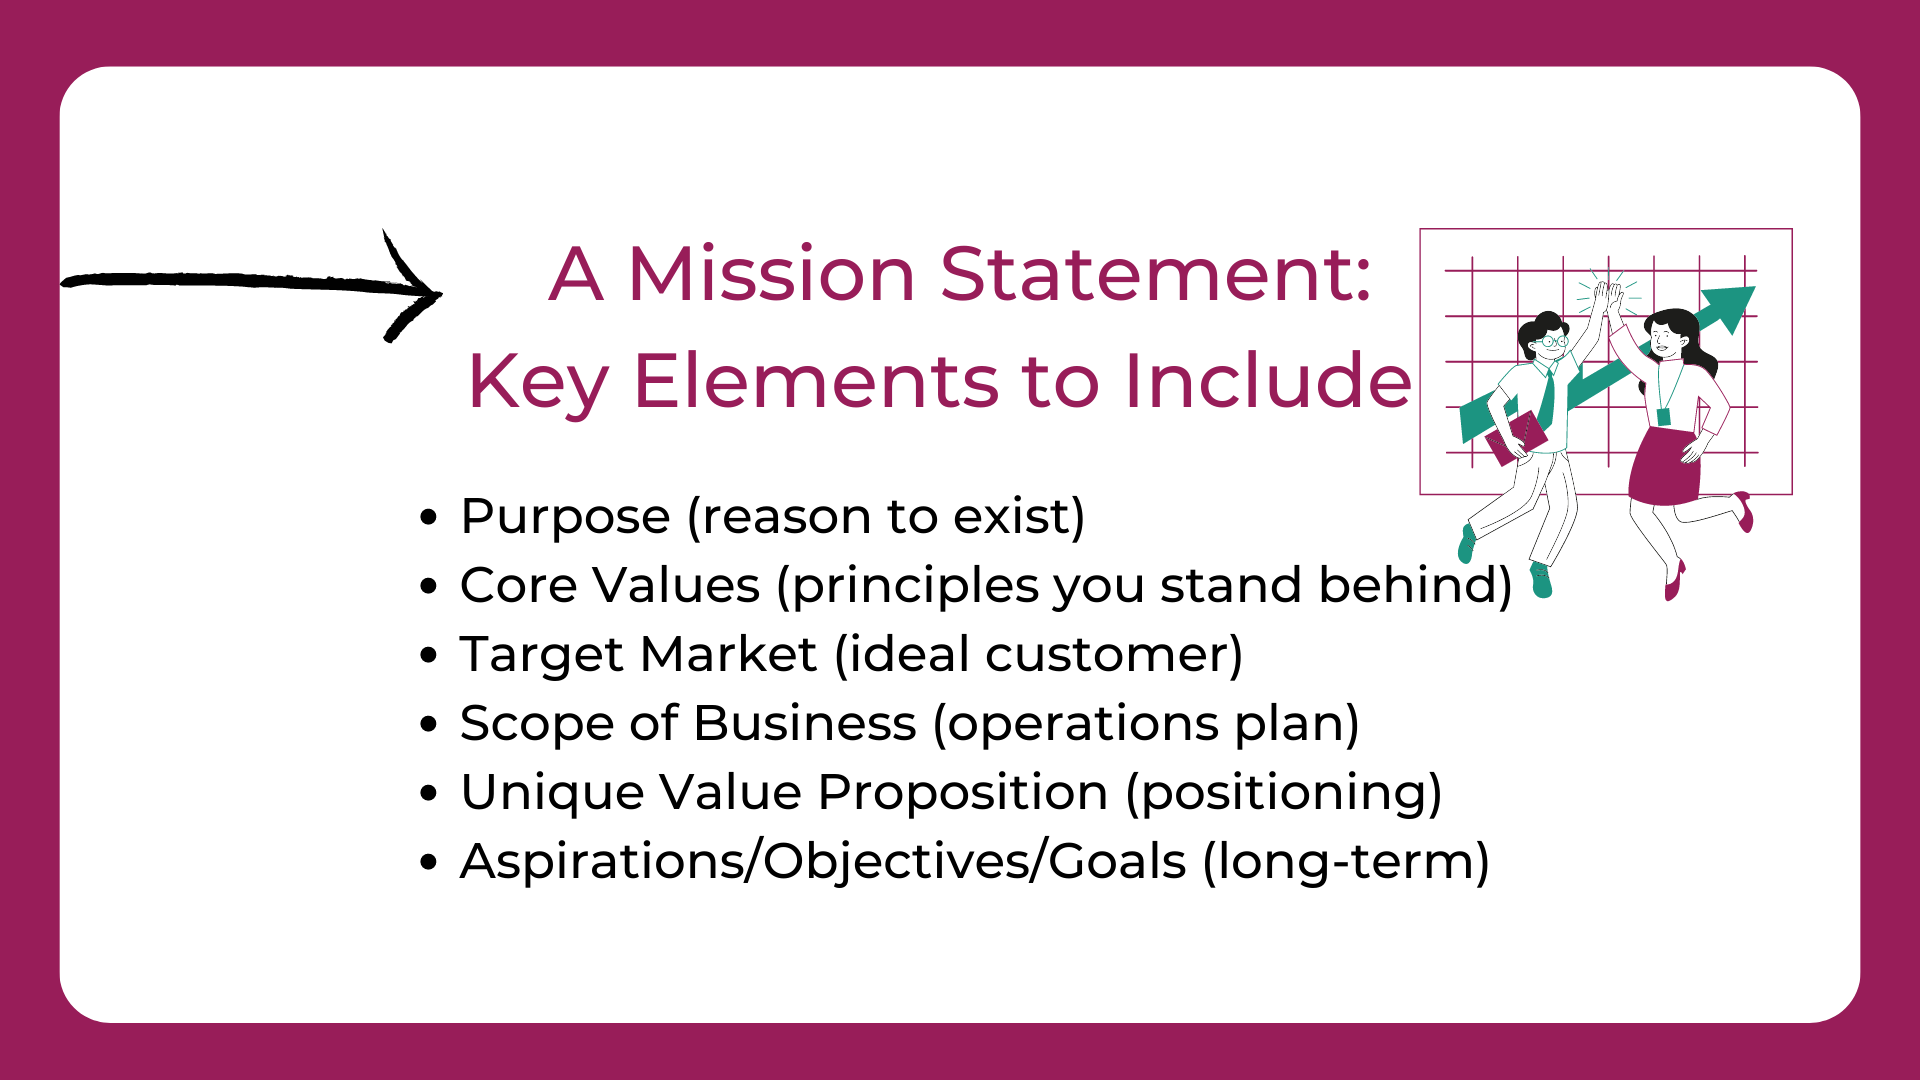 Key Elements to Include in a Mission Statement visual 2 BizSugar by Sue-Ann Bubacz